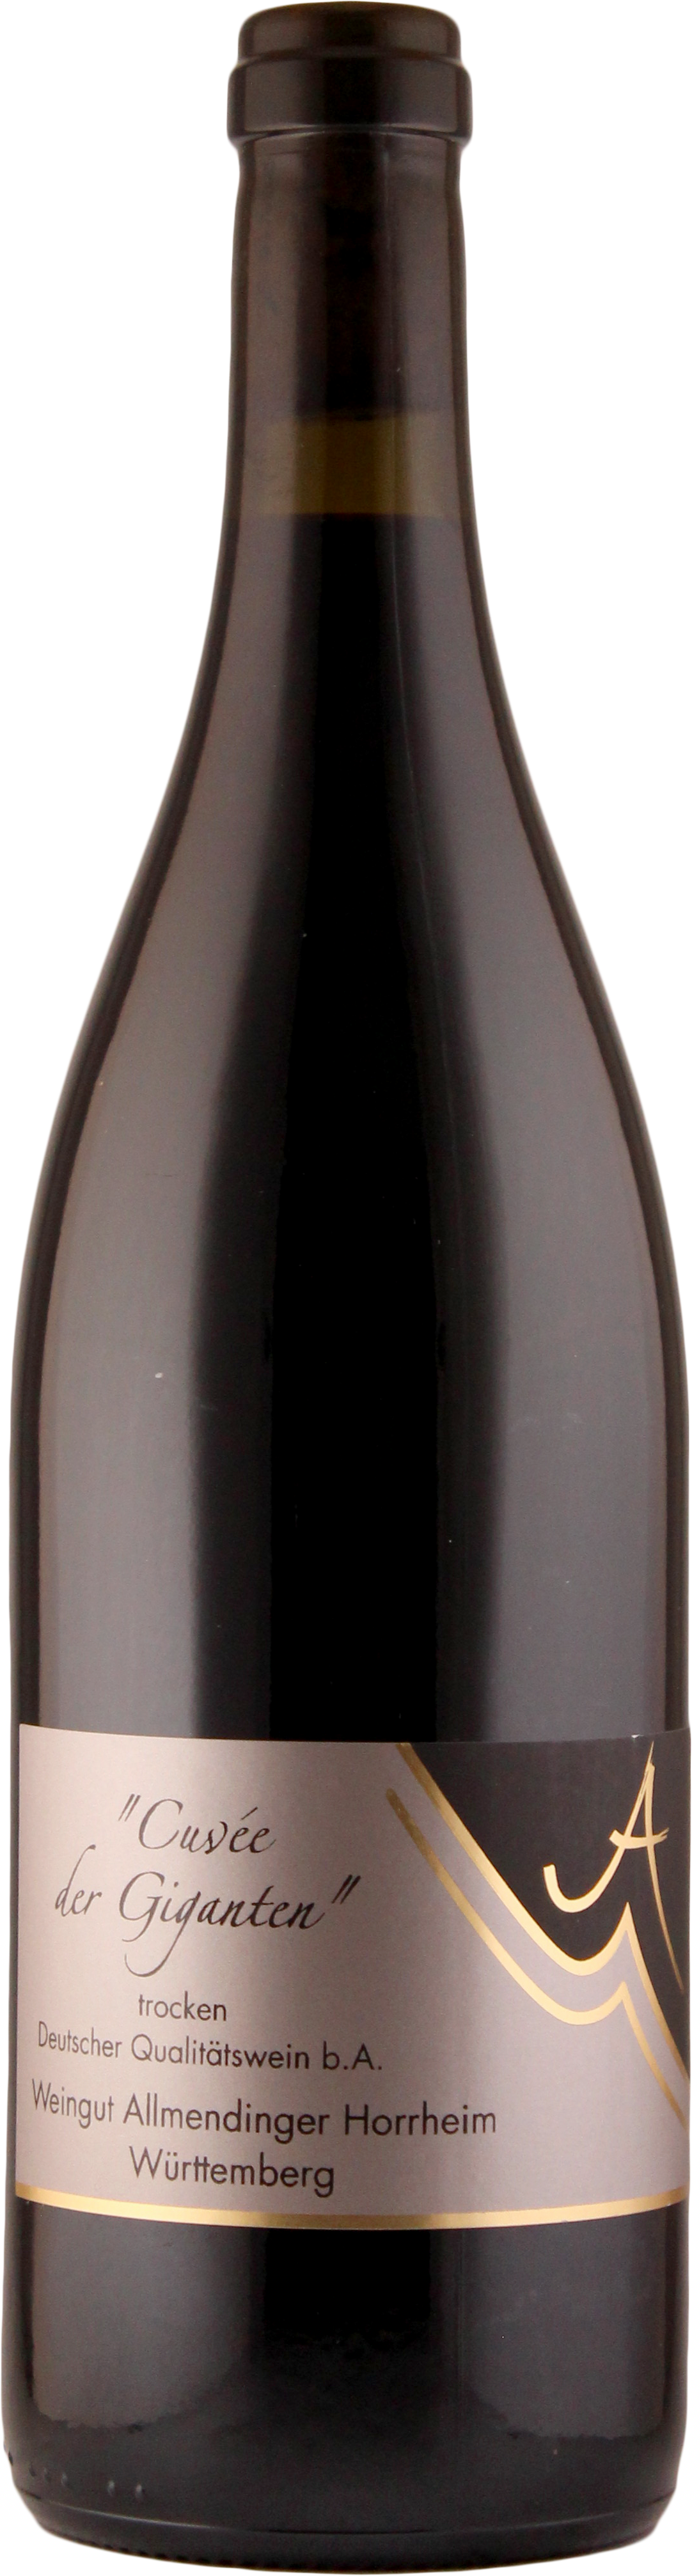 Cuveé der Giganten 0,75 L Rotwein trocken - Weingut Allmendinger